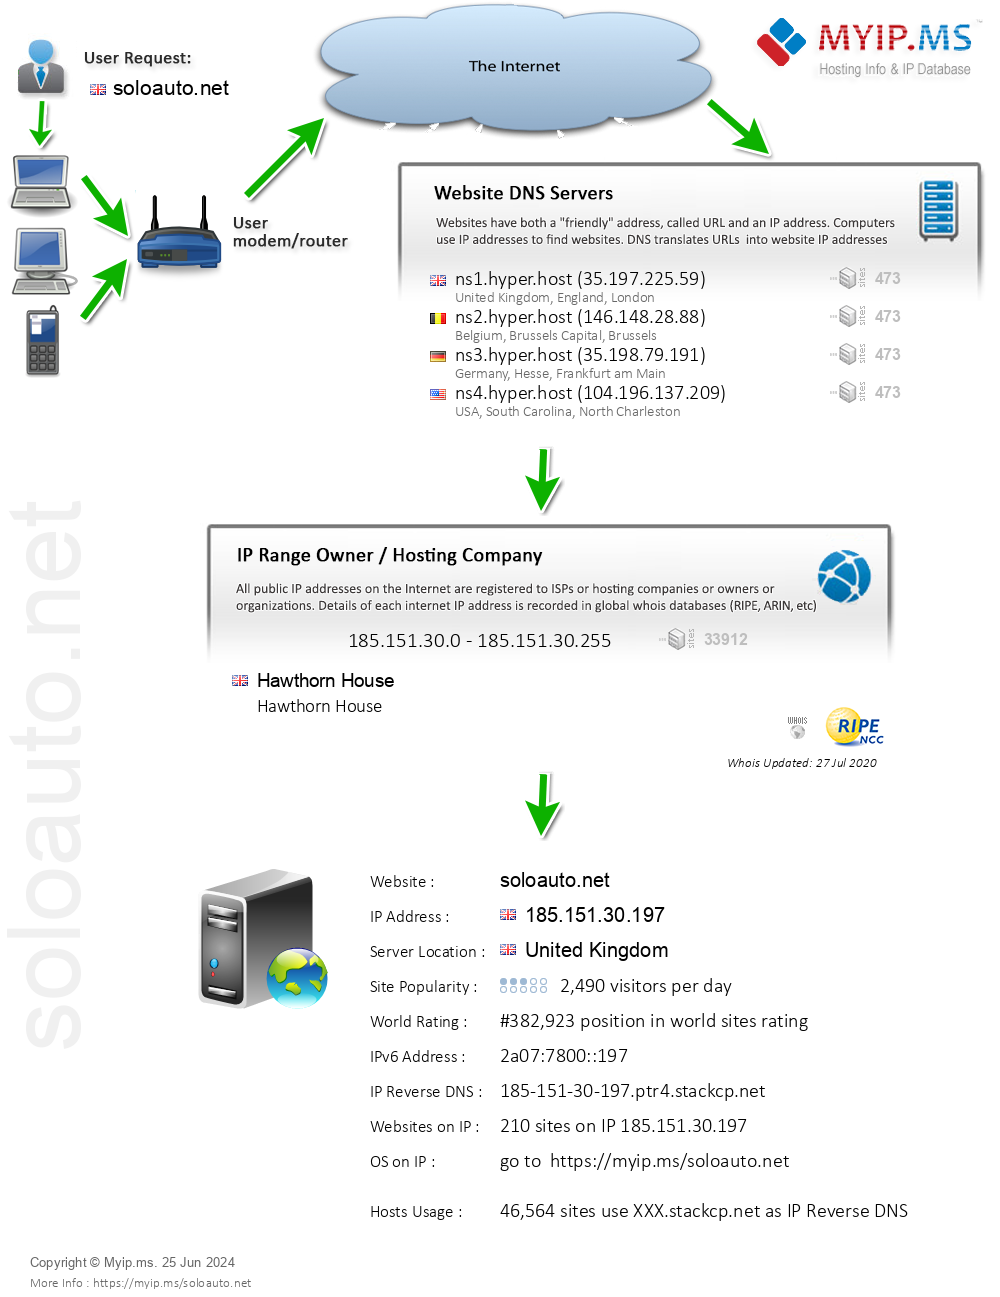 Soloauto.net - Website Hosting Visual IP Diagram